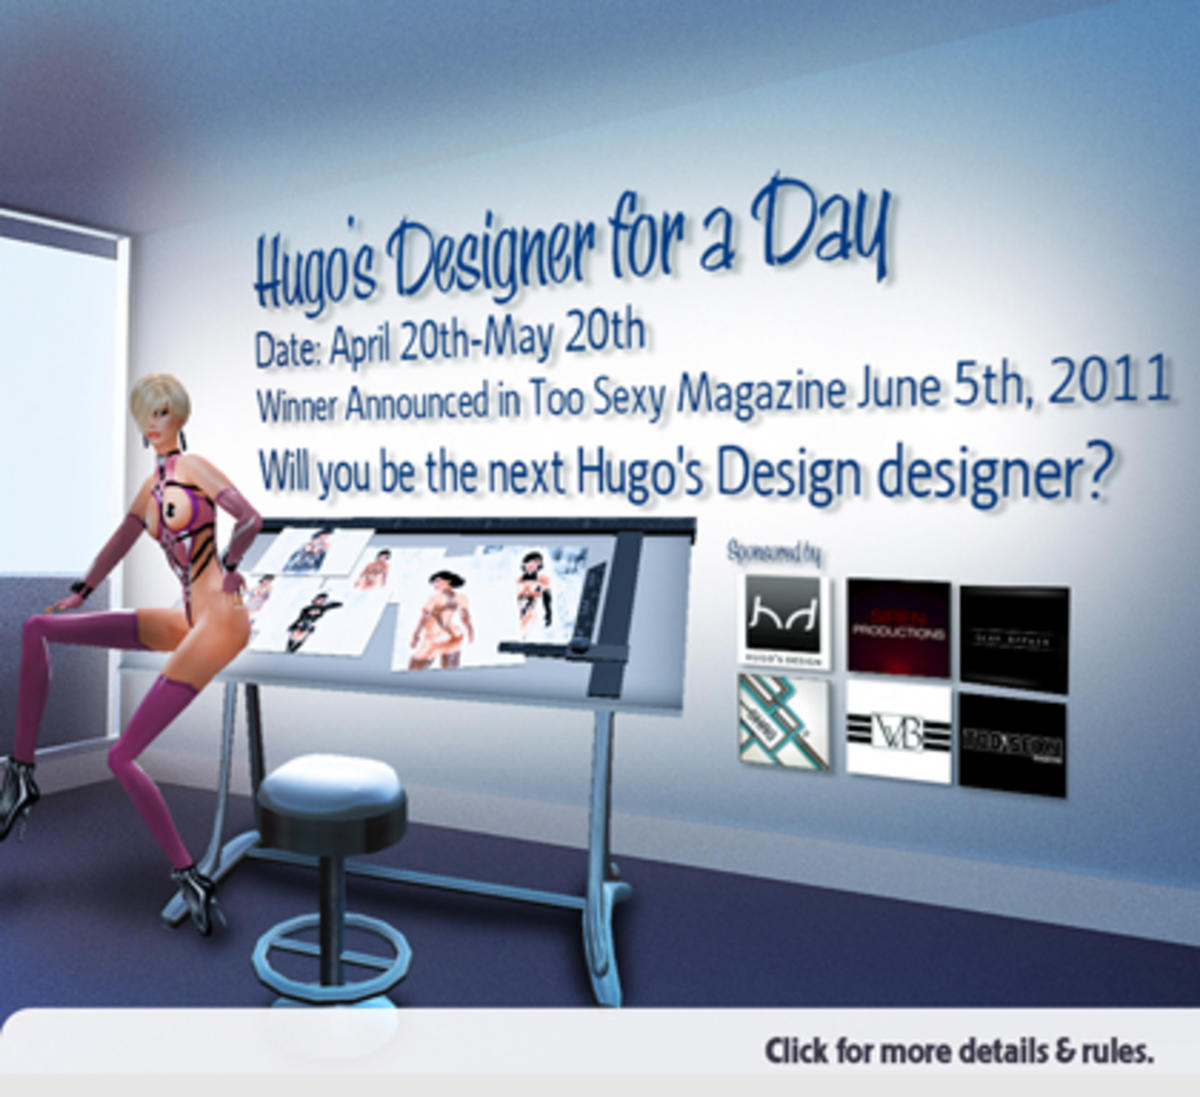 Hugo's Design - Designer for a day